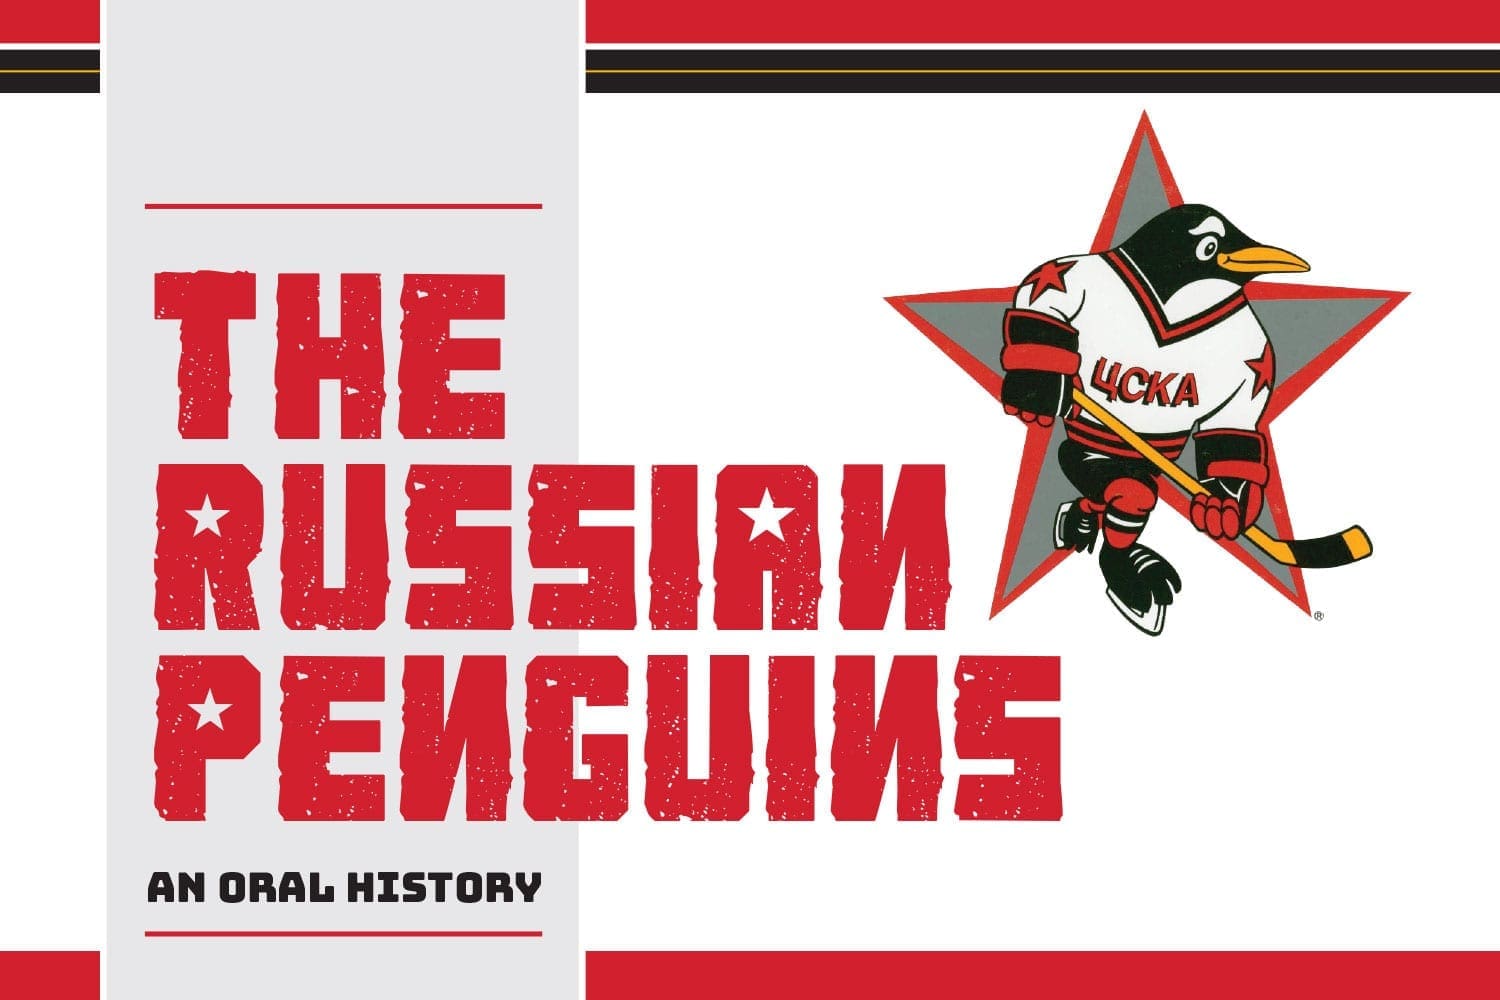 Russian Penguins